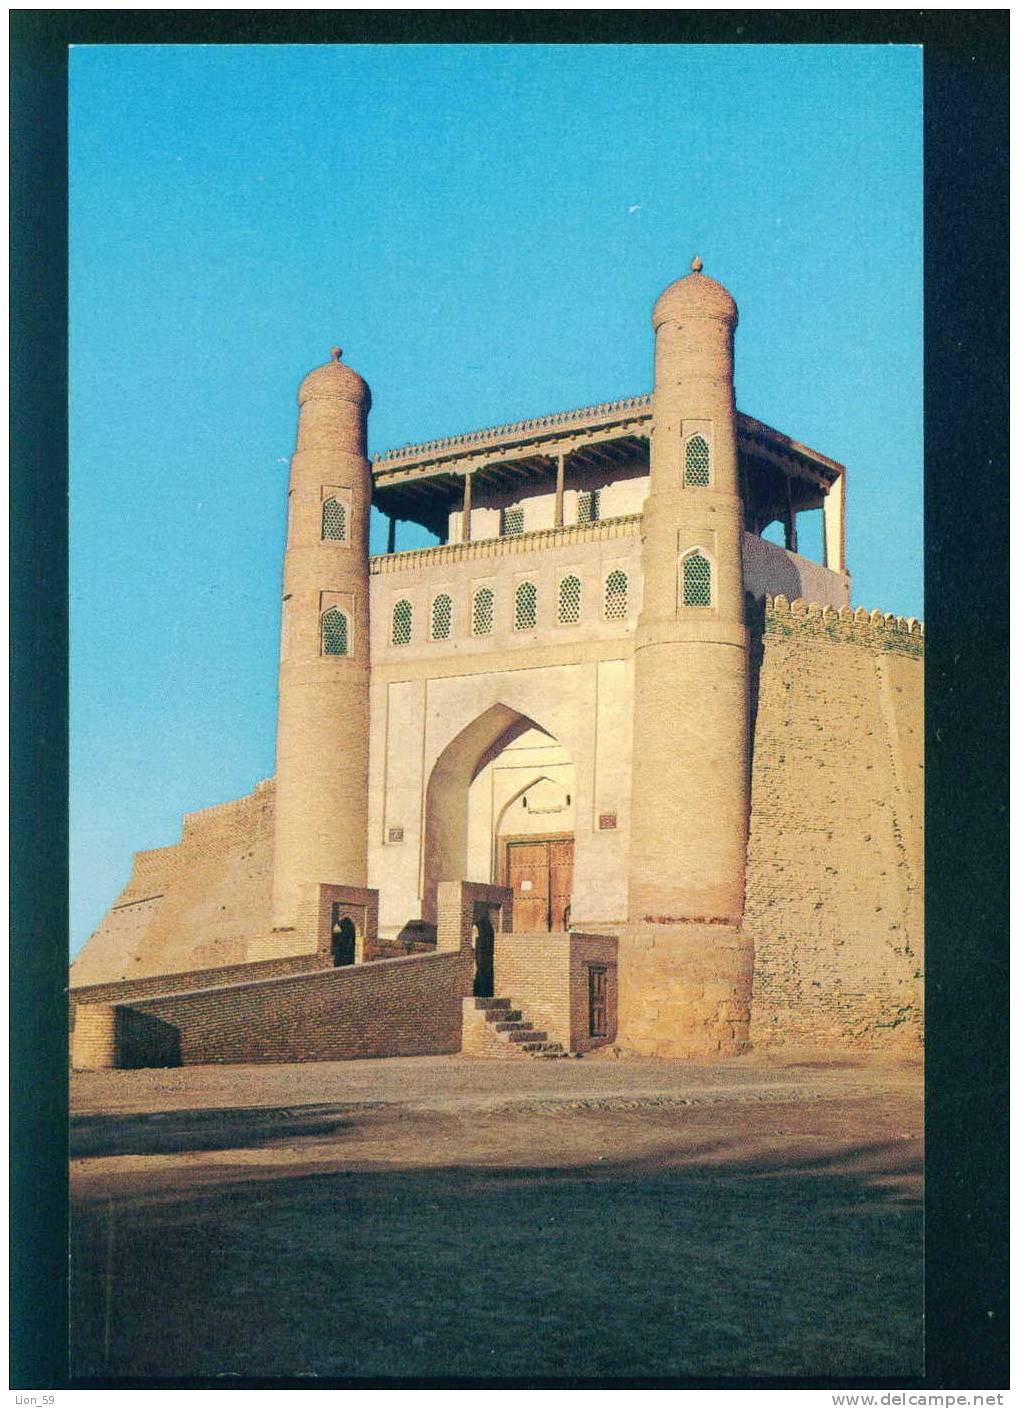 Uzbekistan - BUKHARA - ARQ ( CITADEL ) THE GATES 10 TH - 19 TH CENTURIES / 086053 - Usbekistan